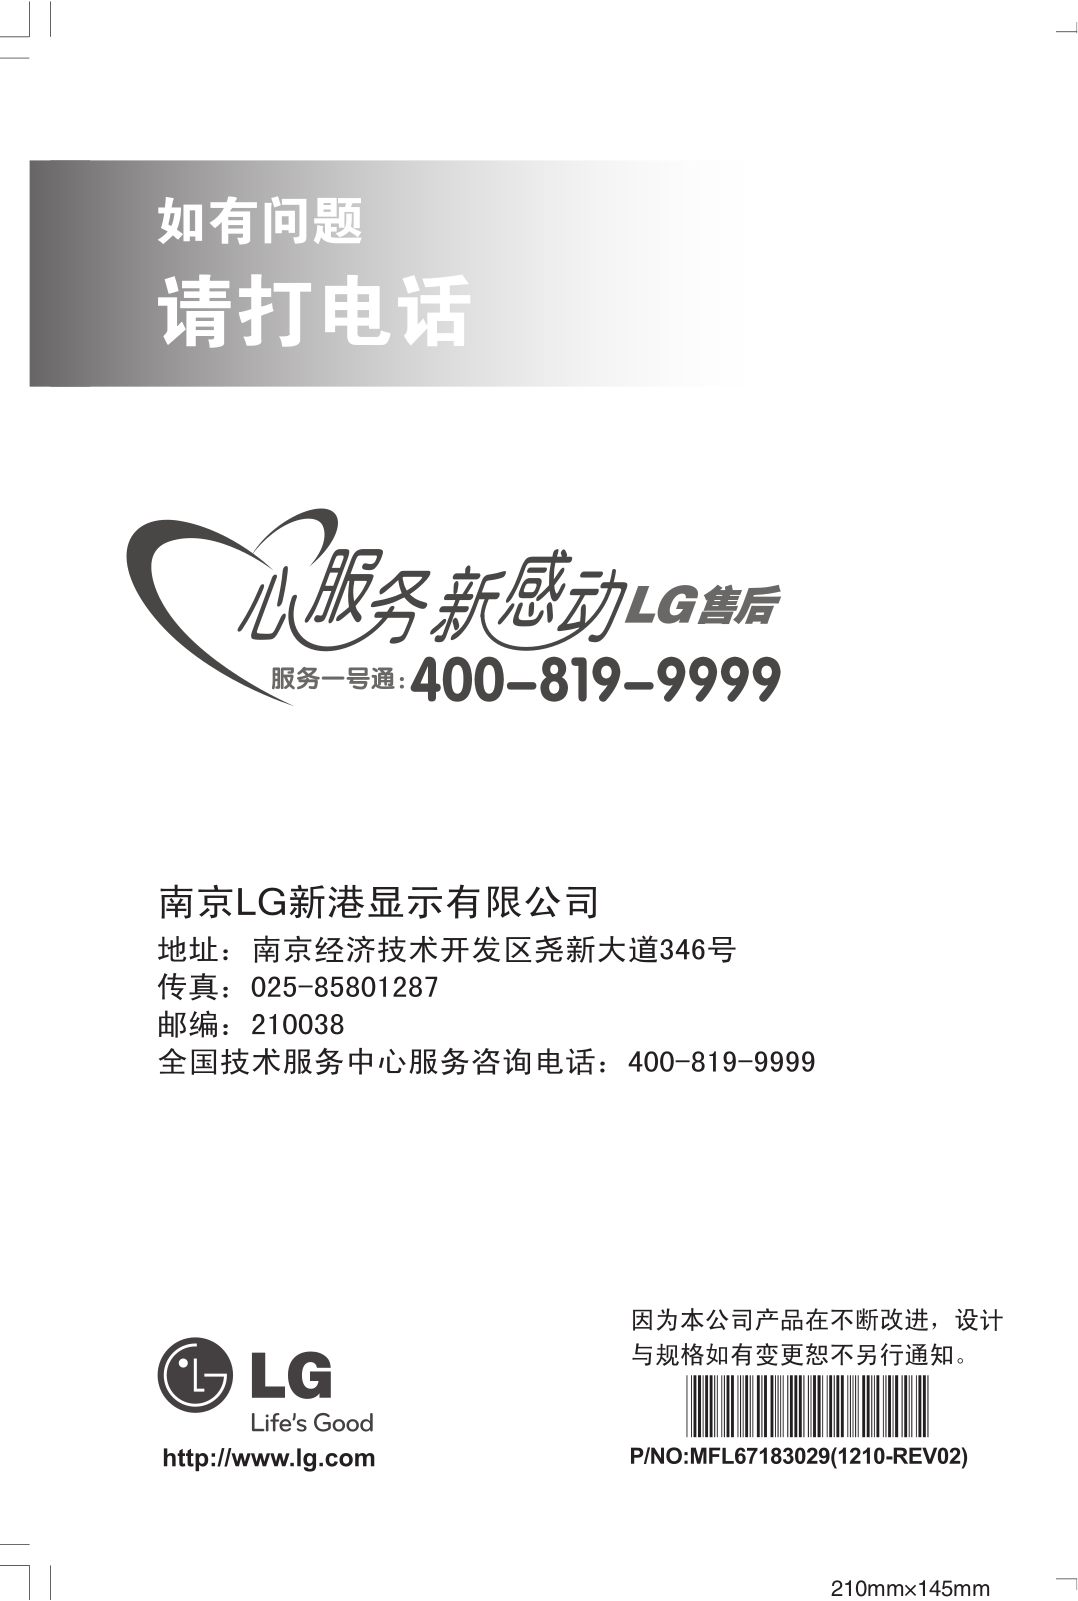 LG E2248C-BN Product Manual